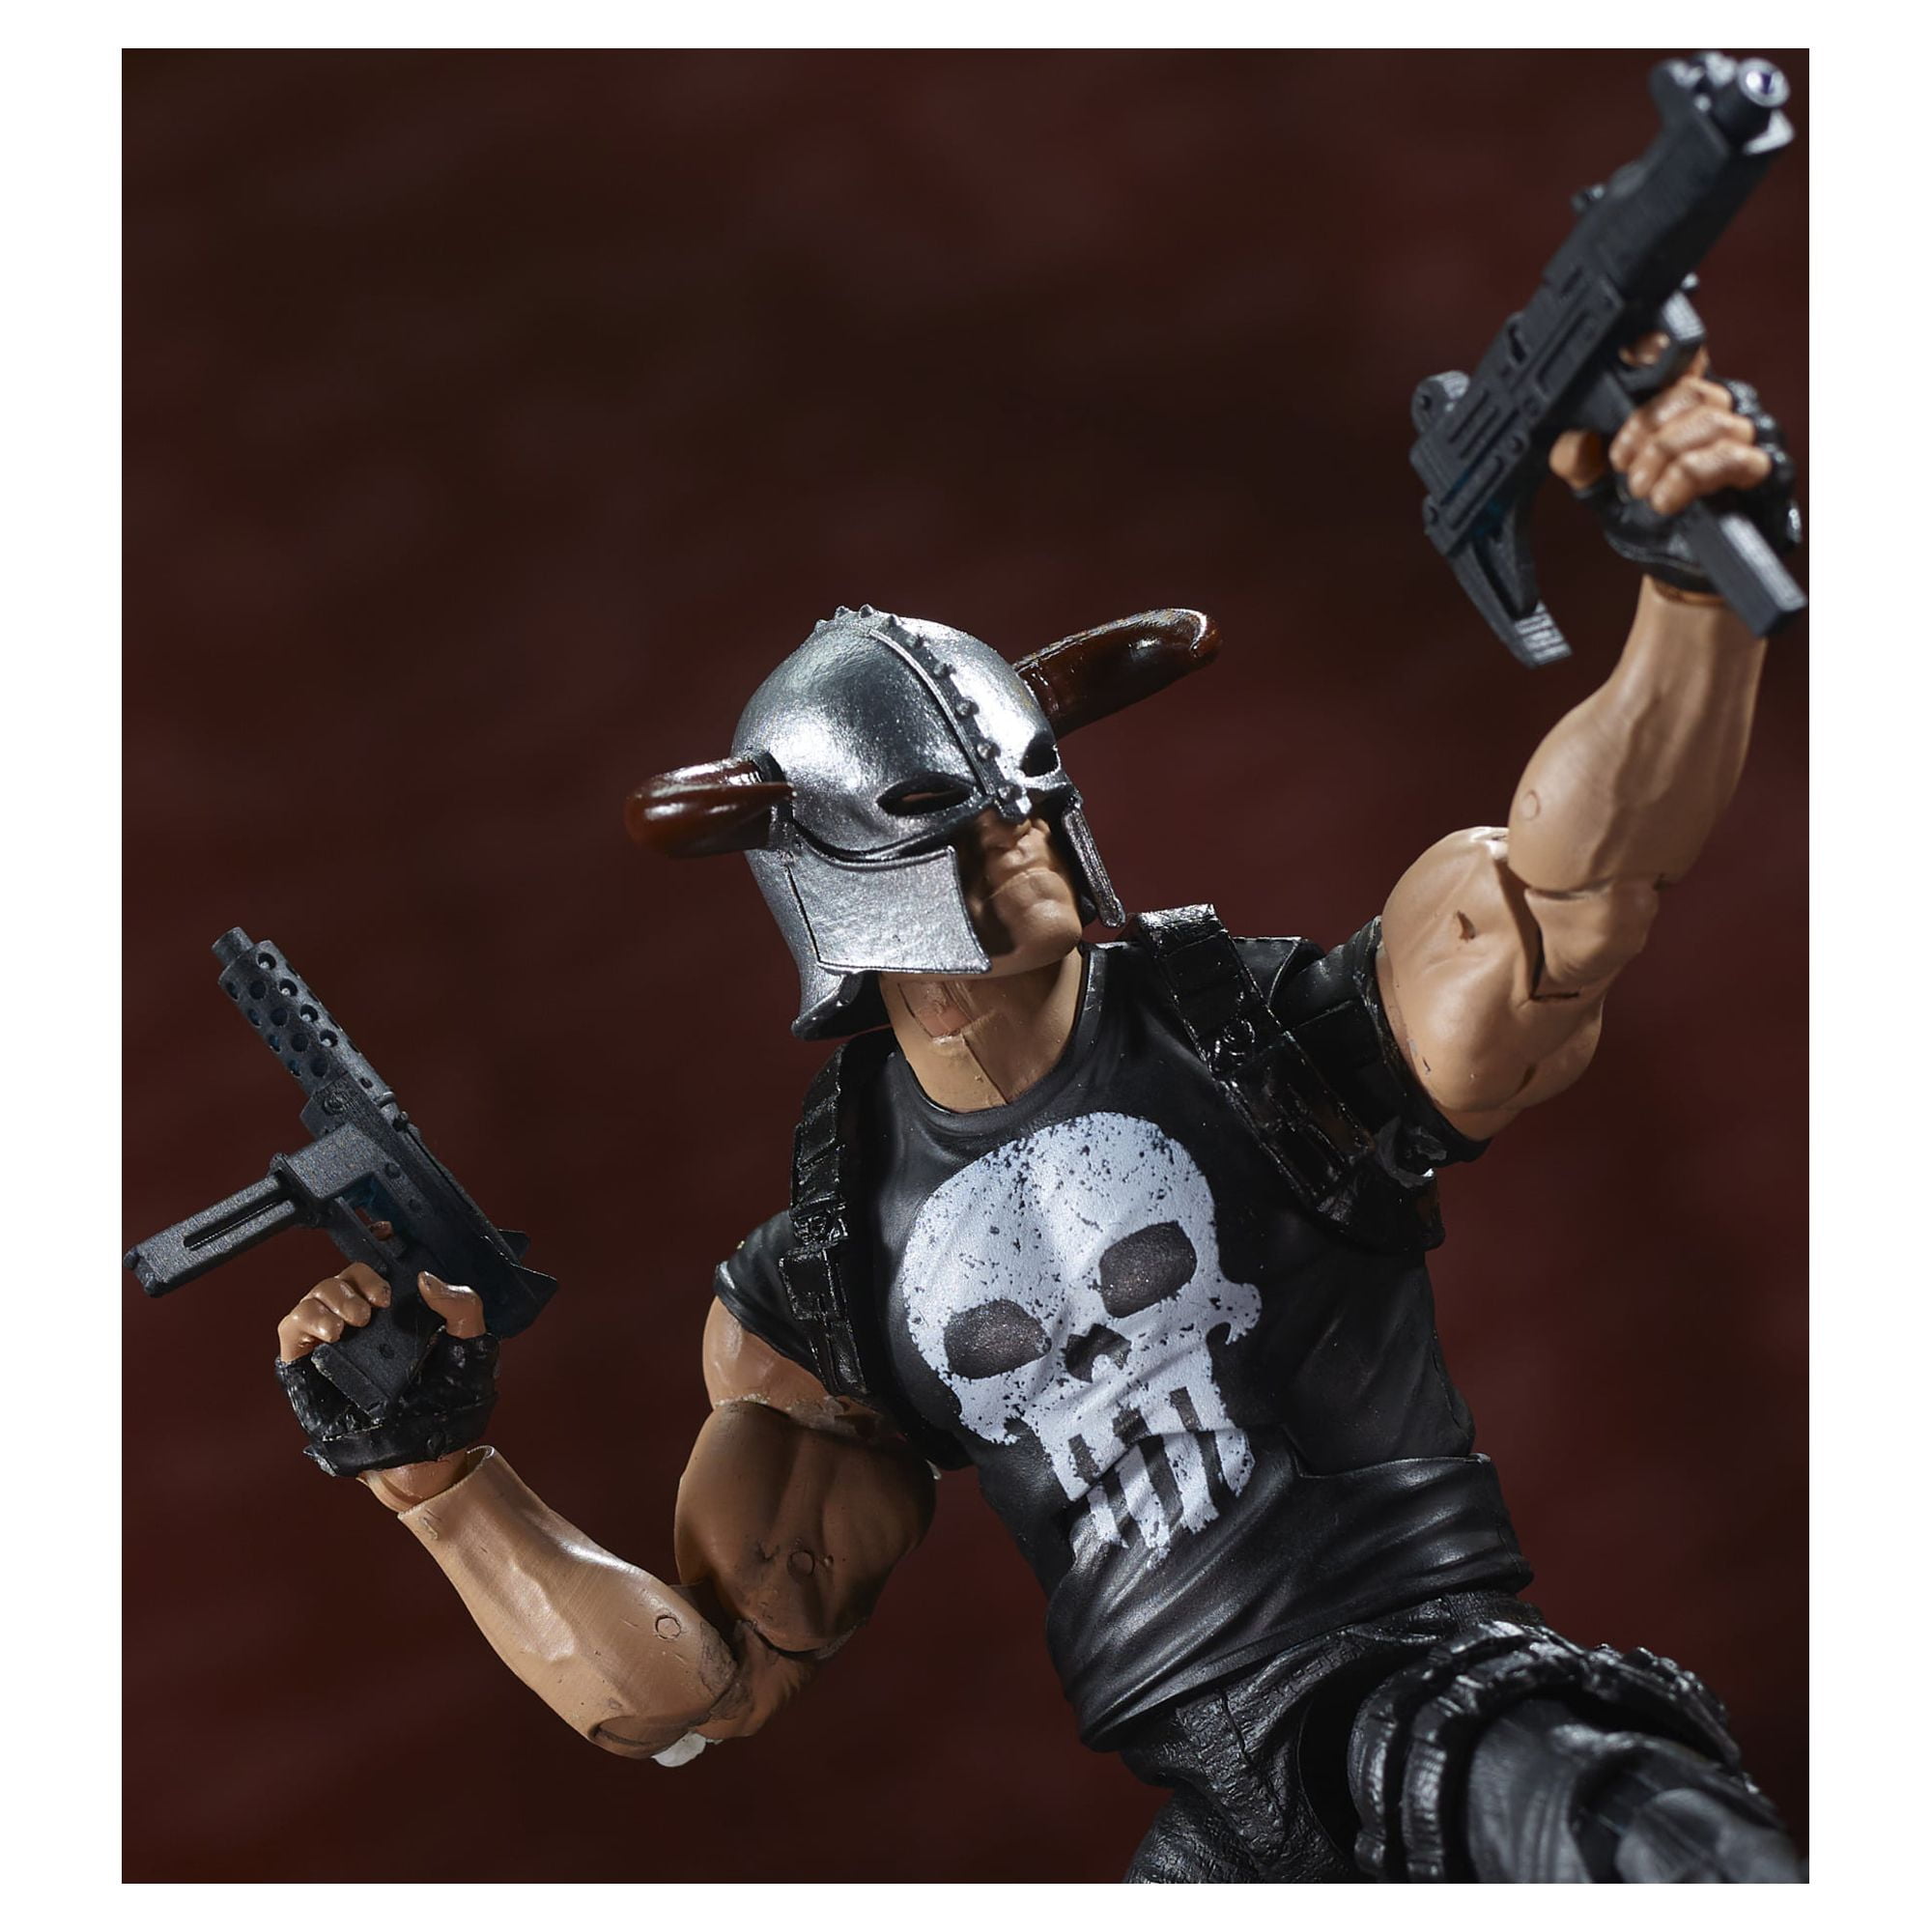 Marvel Legends The Punisher Skull face 6 action figure (open package)